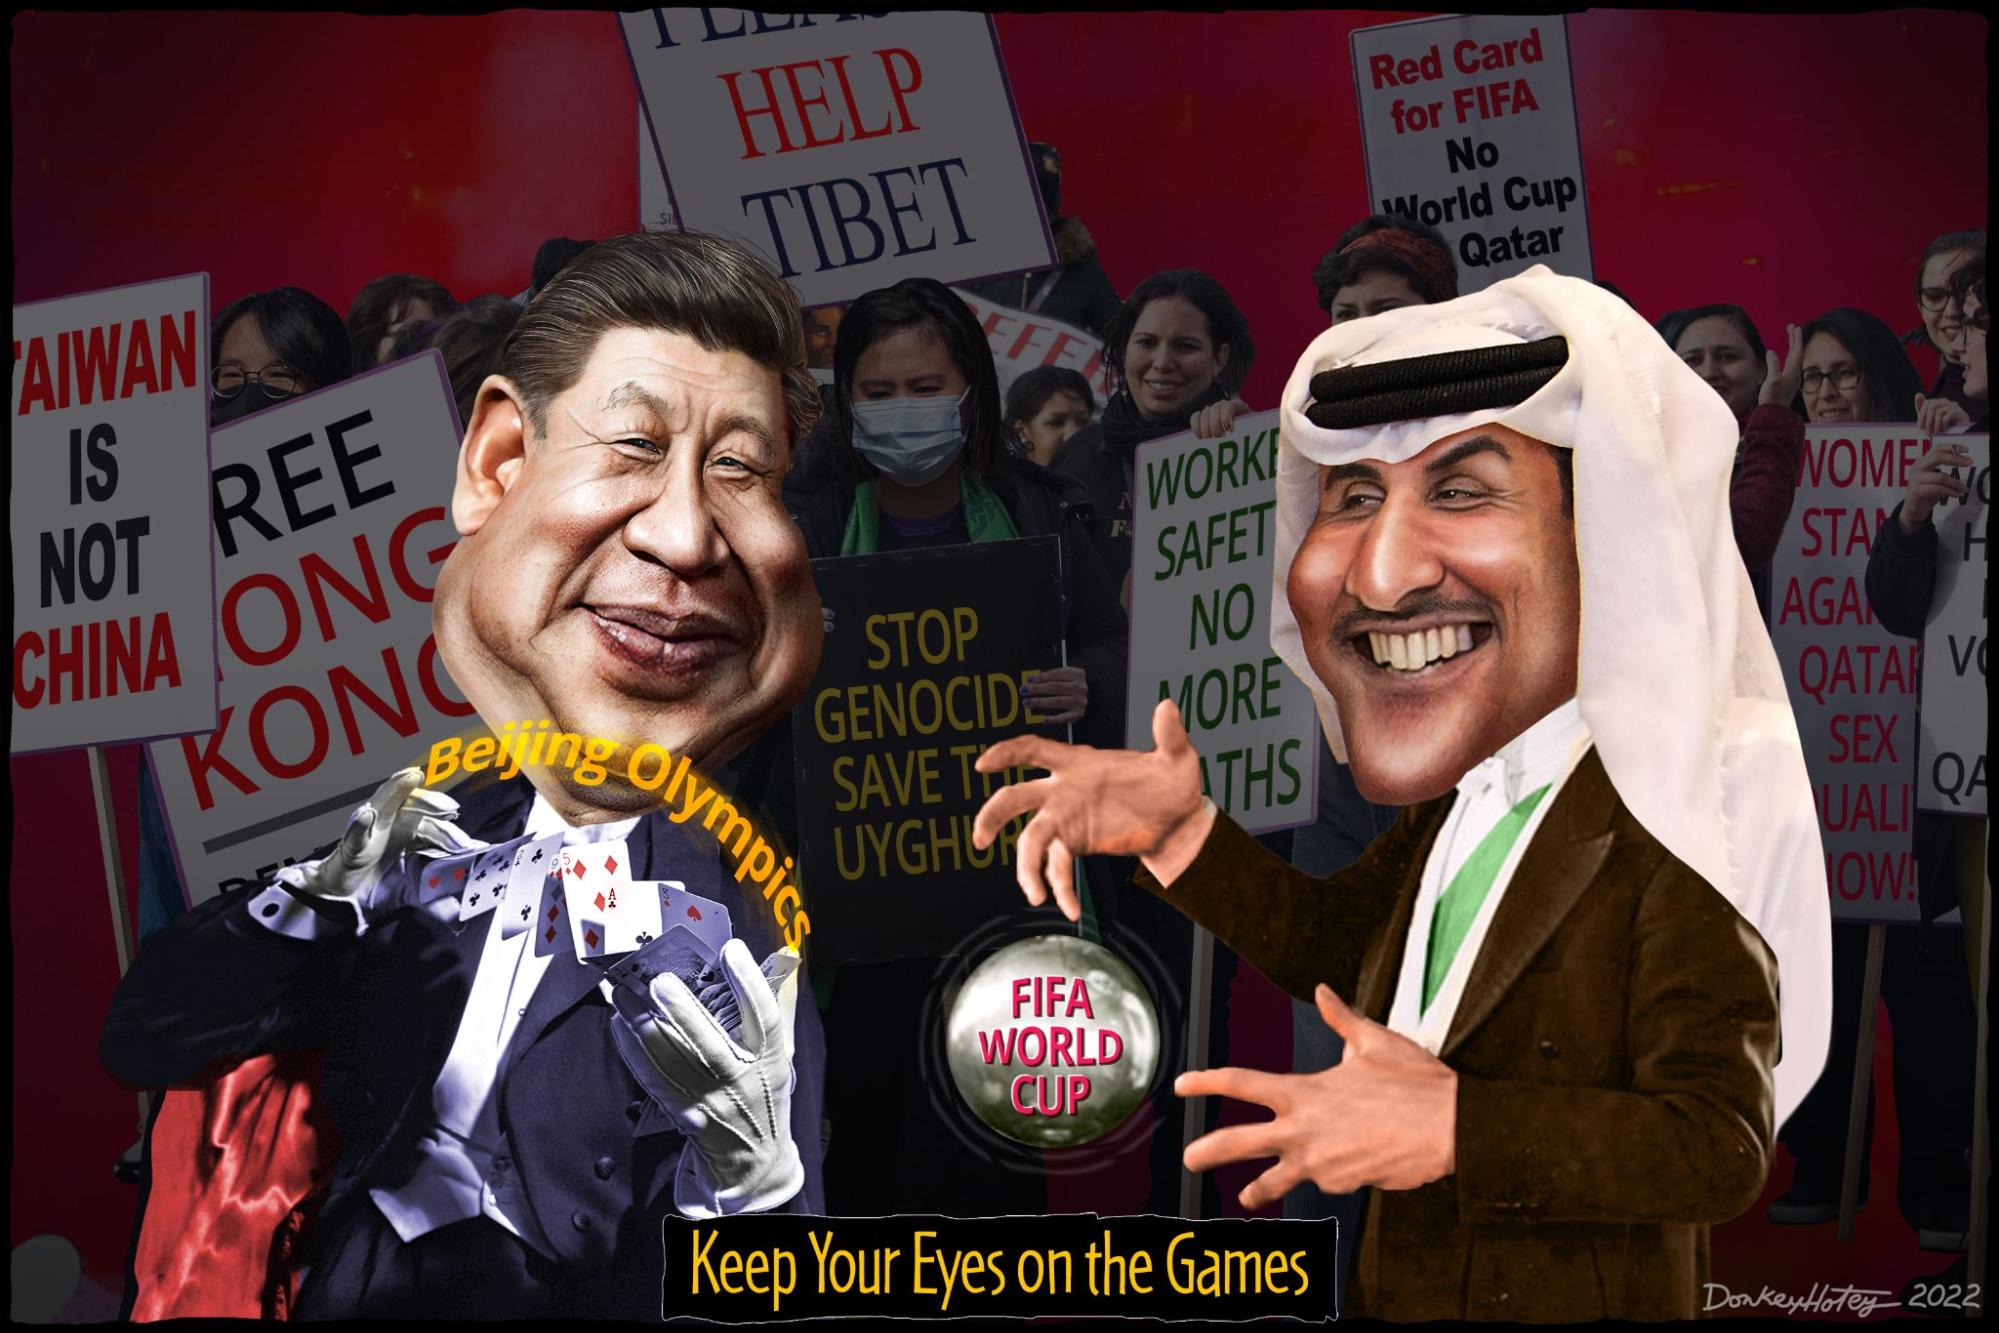 Xi Jinping, China, Sheikh Tamim, Qatar, Olympics, FIFA